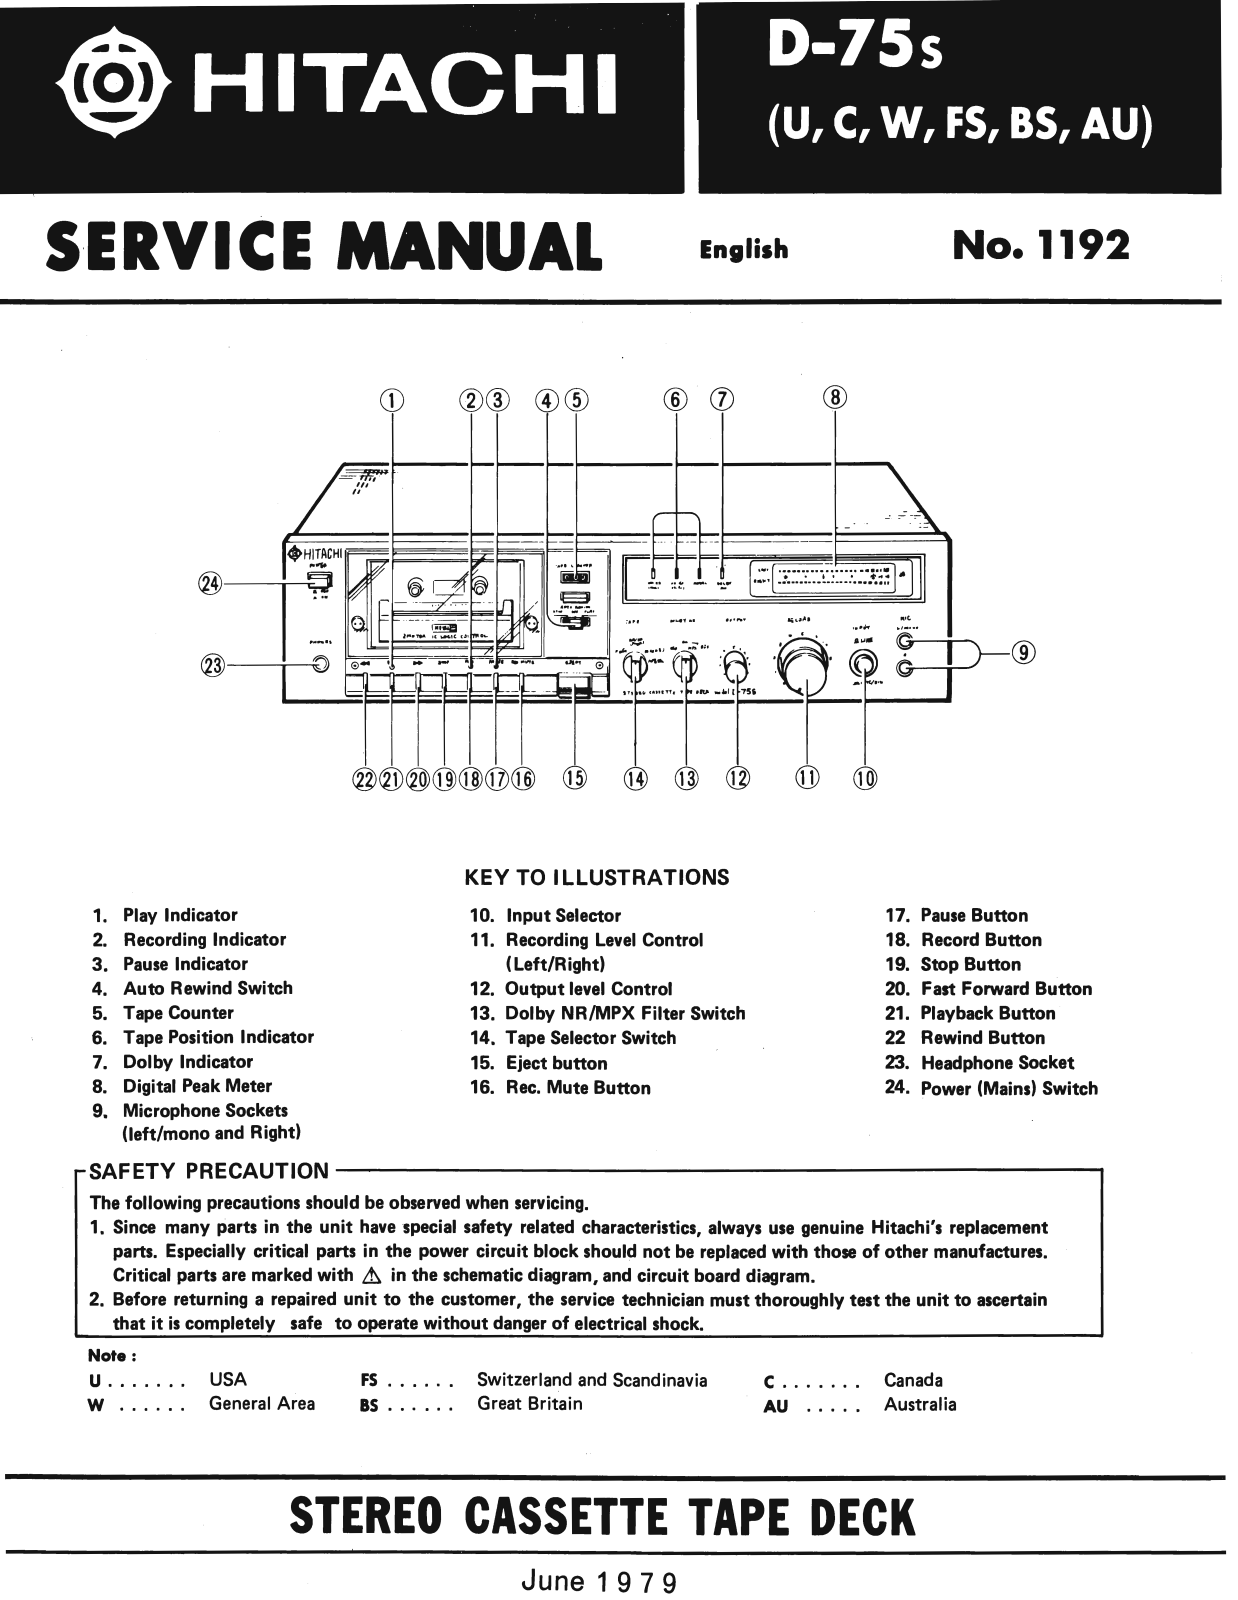 Hitachi D-75-S Service Manual